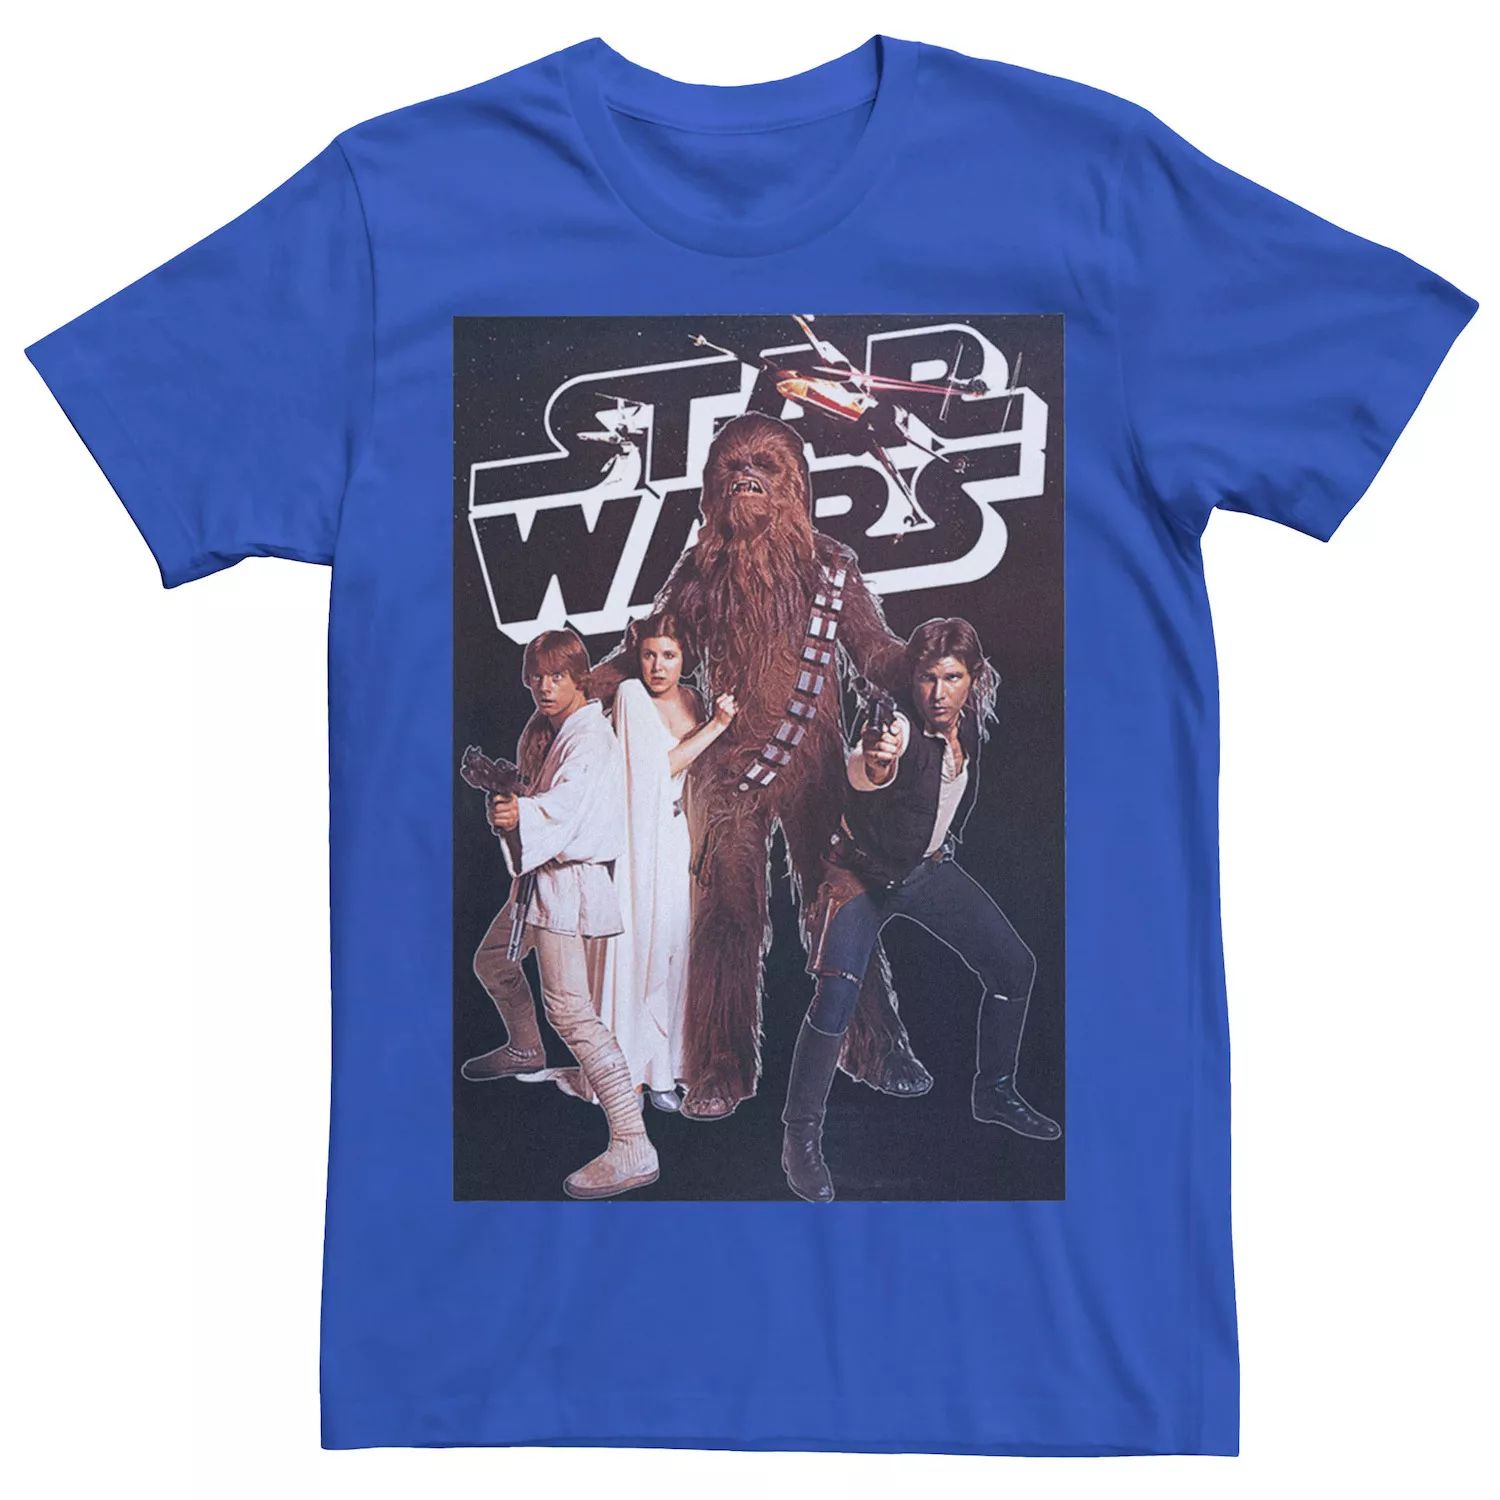 цена Мужская винтажная футболка с плакатом для группы Star Wars